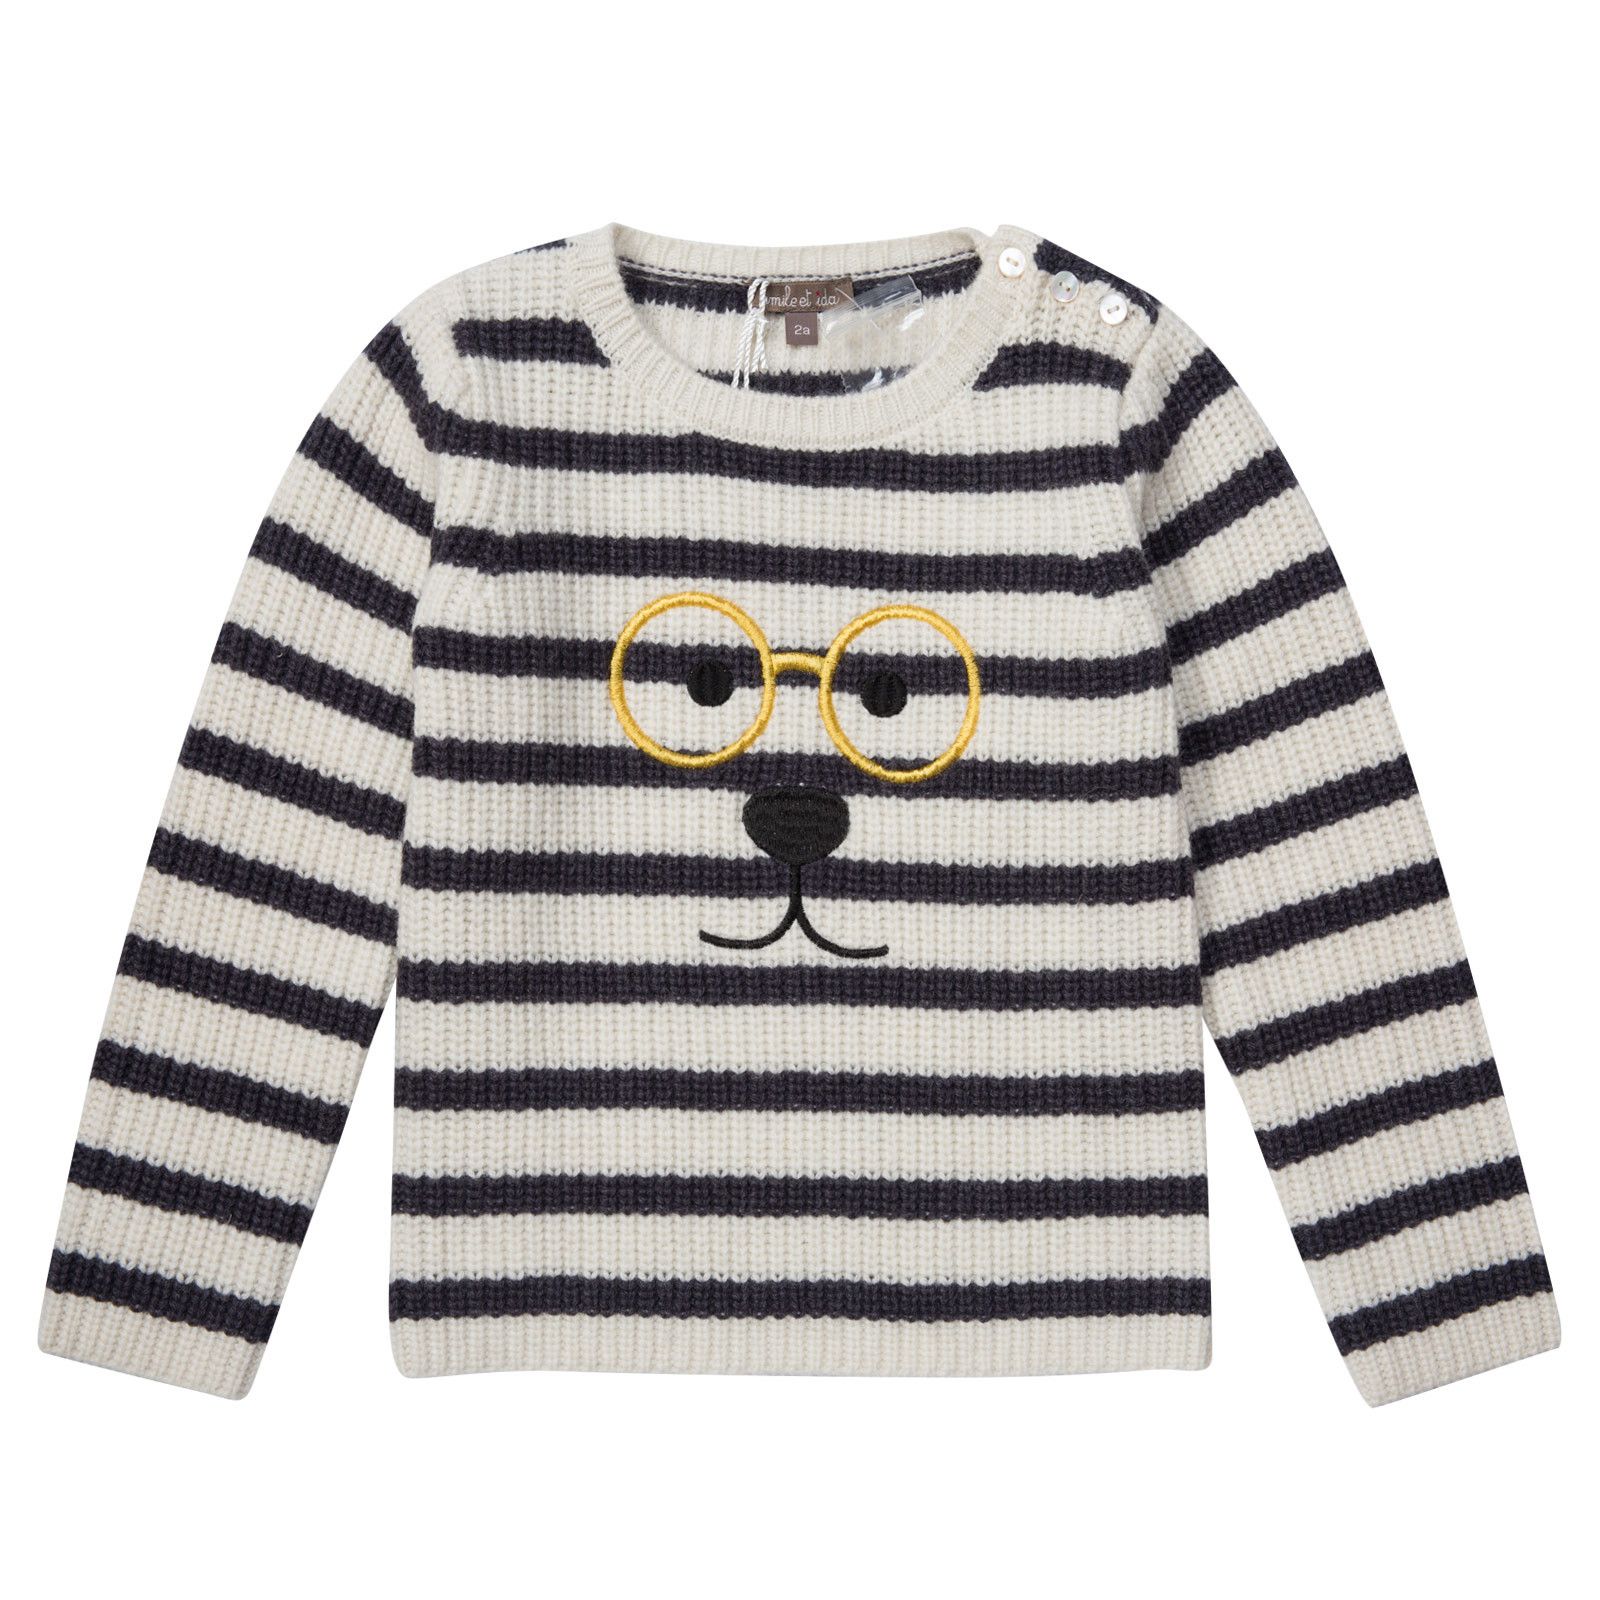 Boys Grey&Blue Stripe Embroidered Monster Sweater - CÉMAROSE | Children's Fashion Store - 1